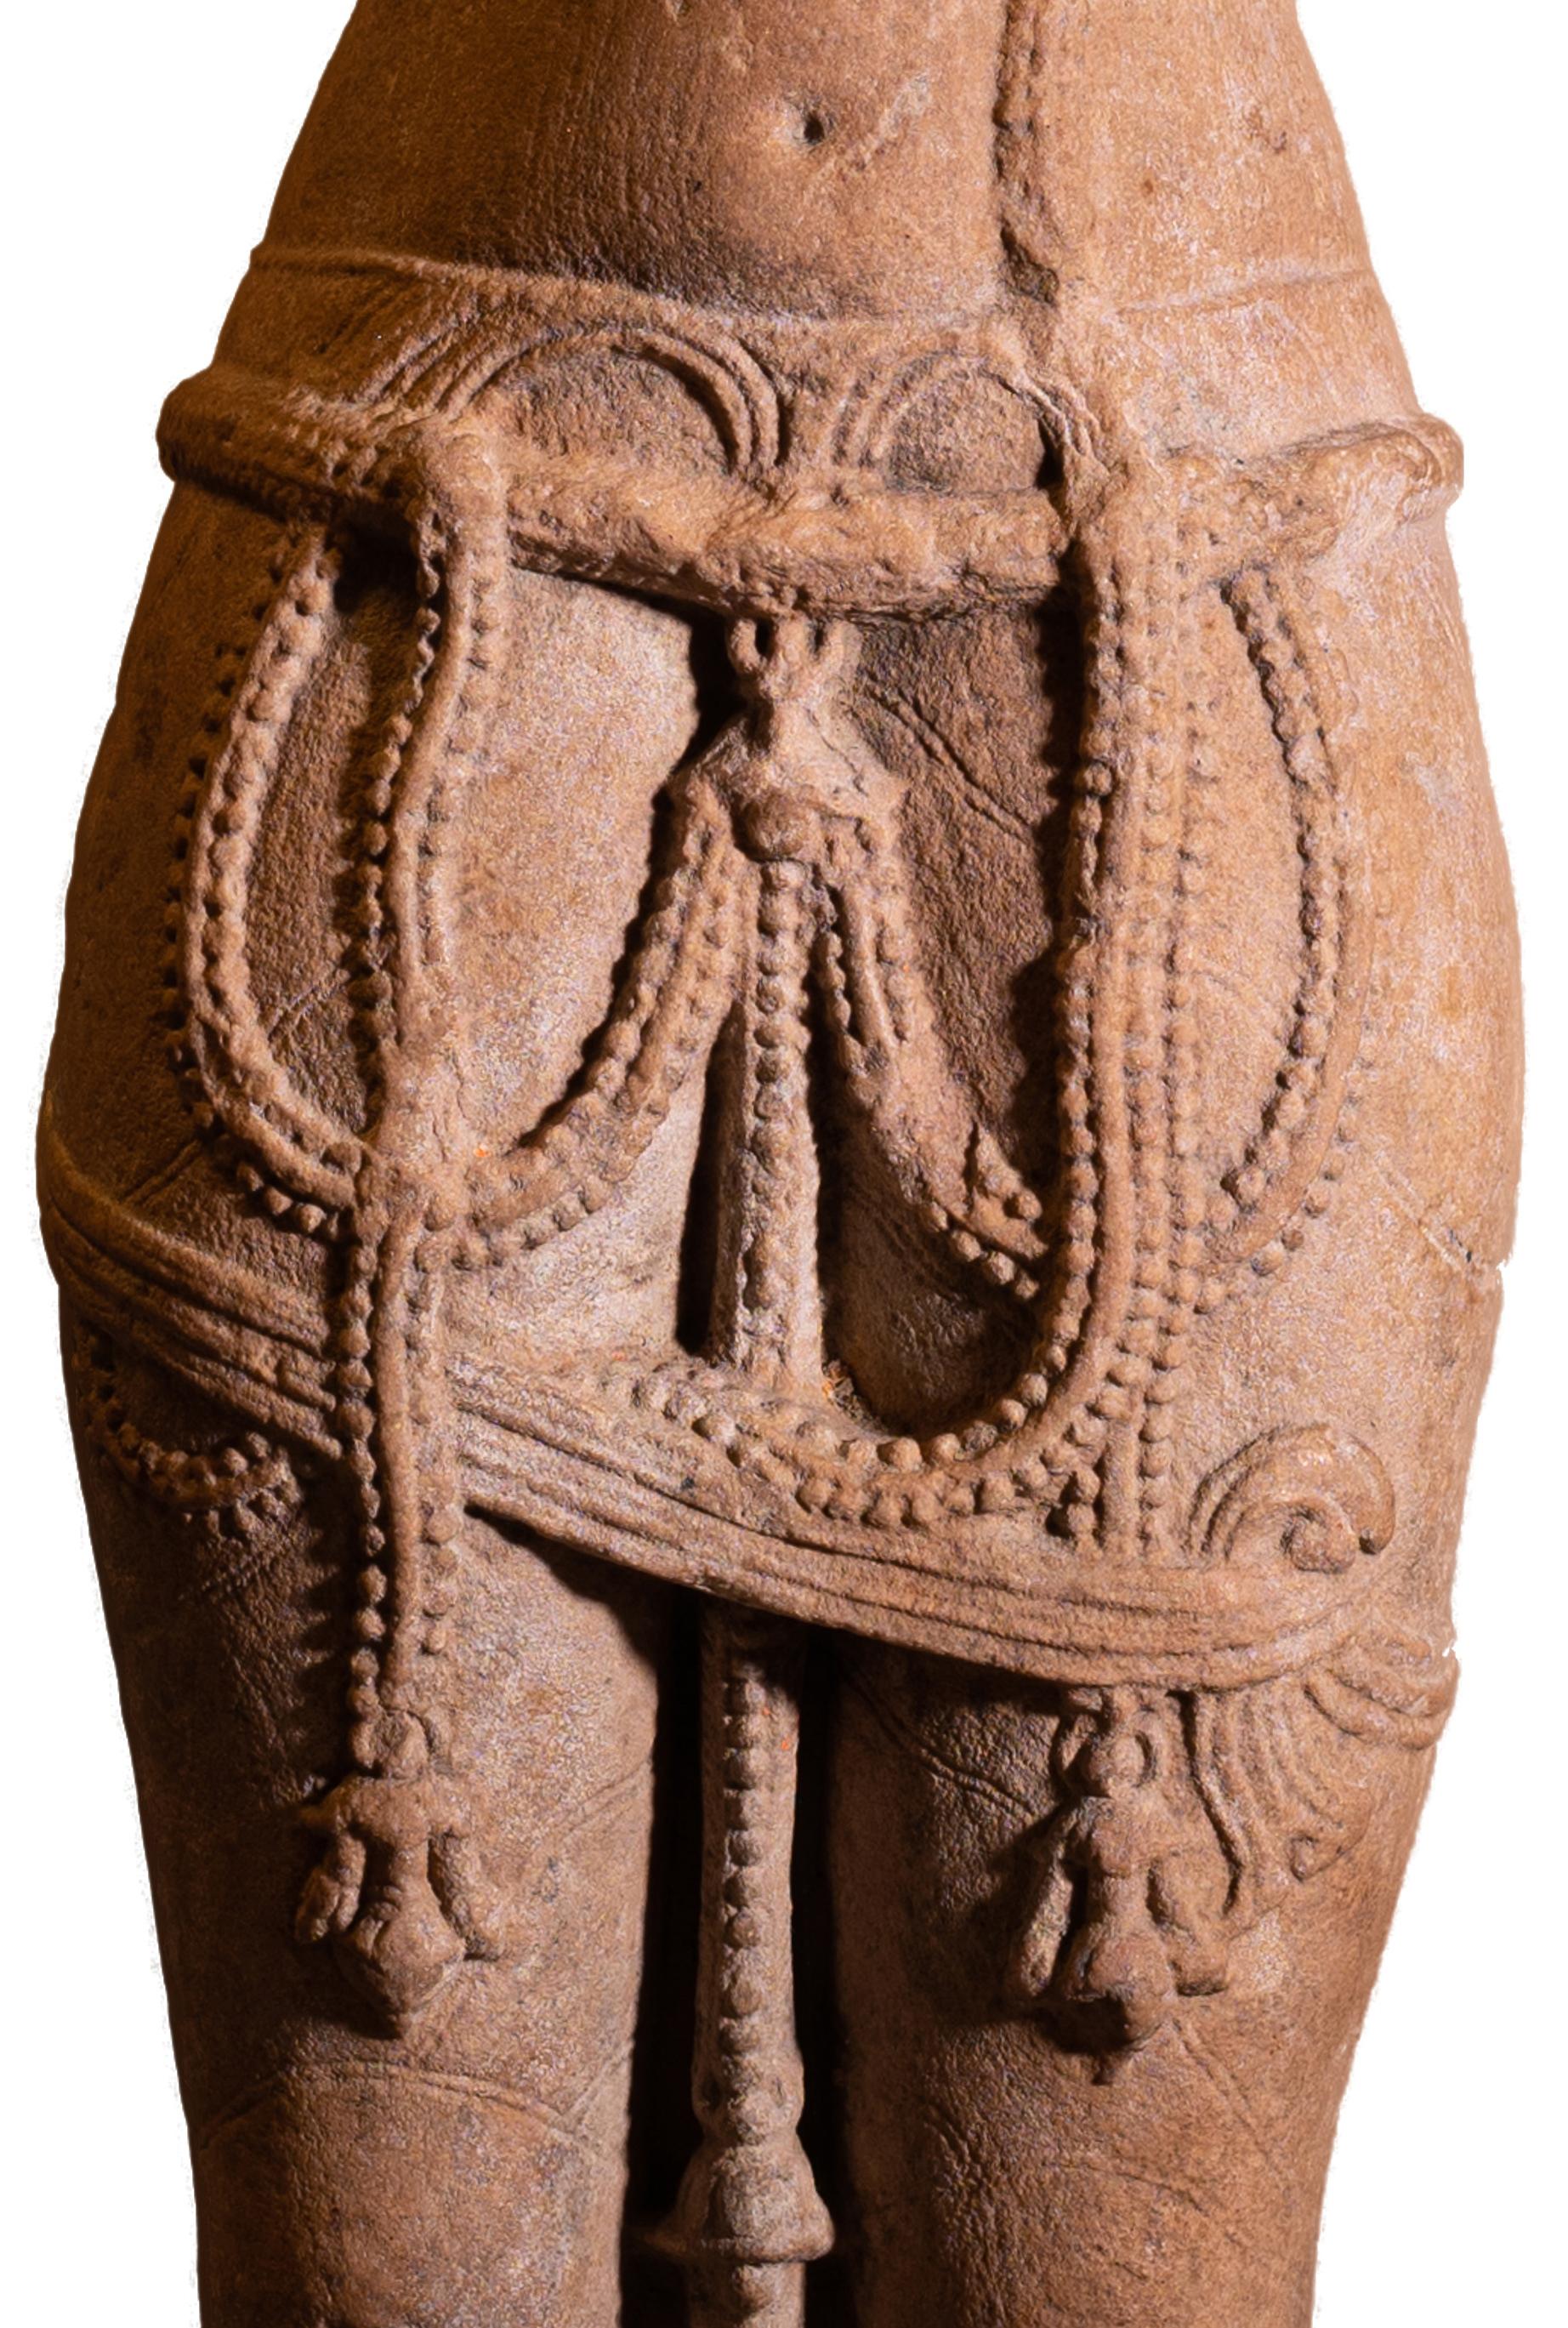 Indian Sandstone Torso of a Male Deity  Possibly Vishnu, Circa 10-11th Century